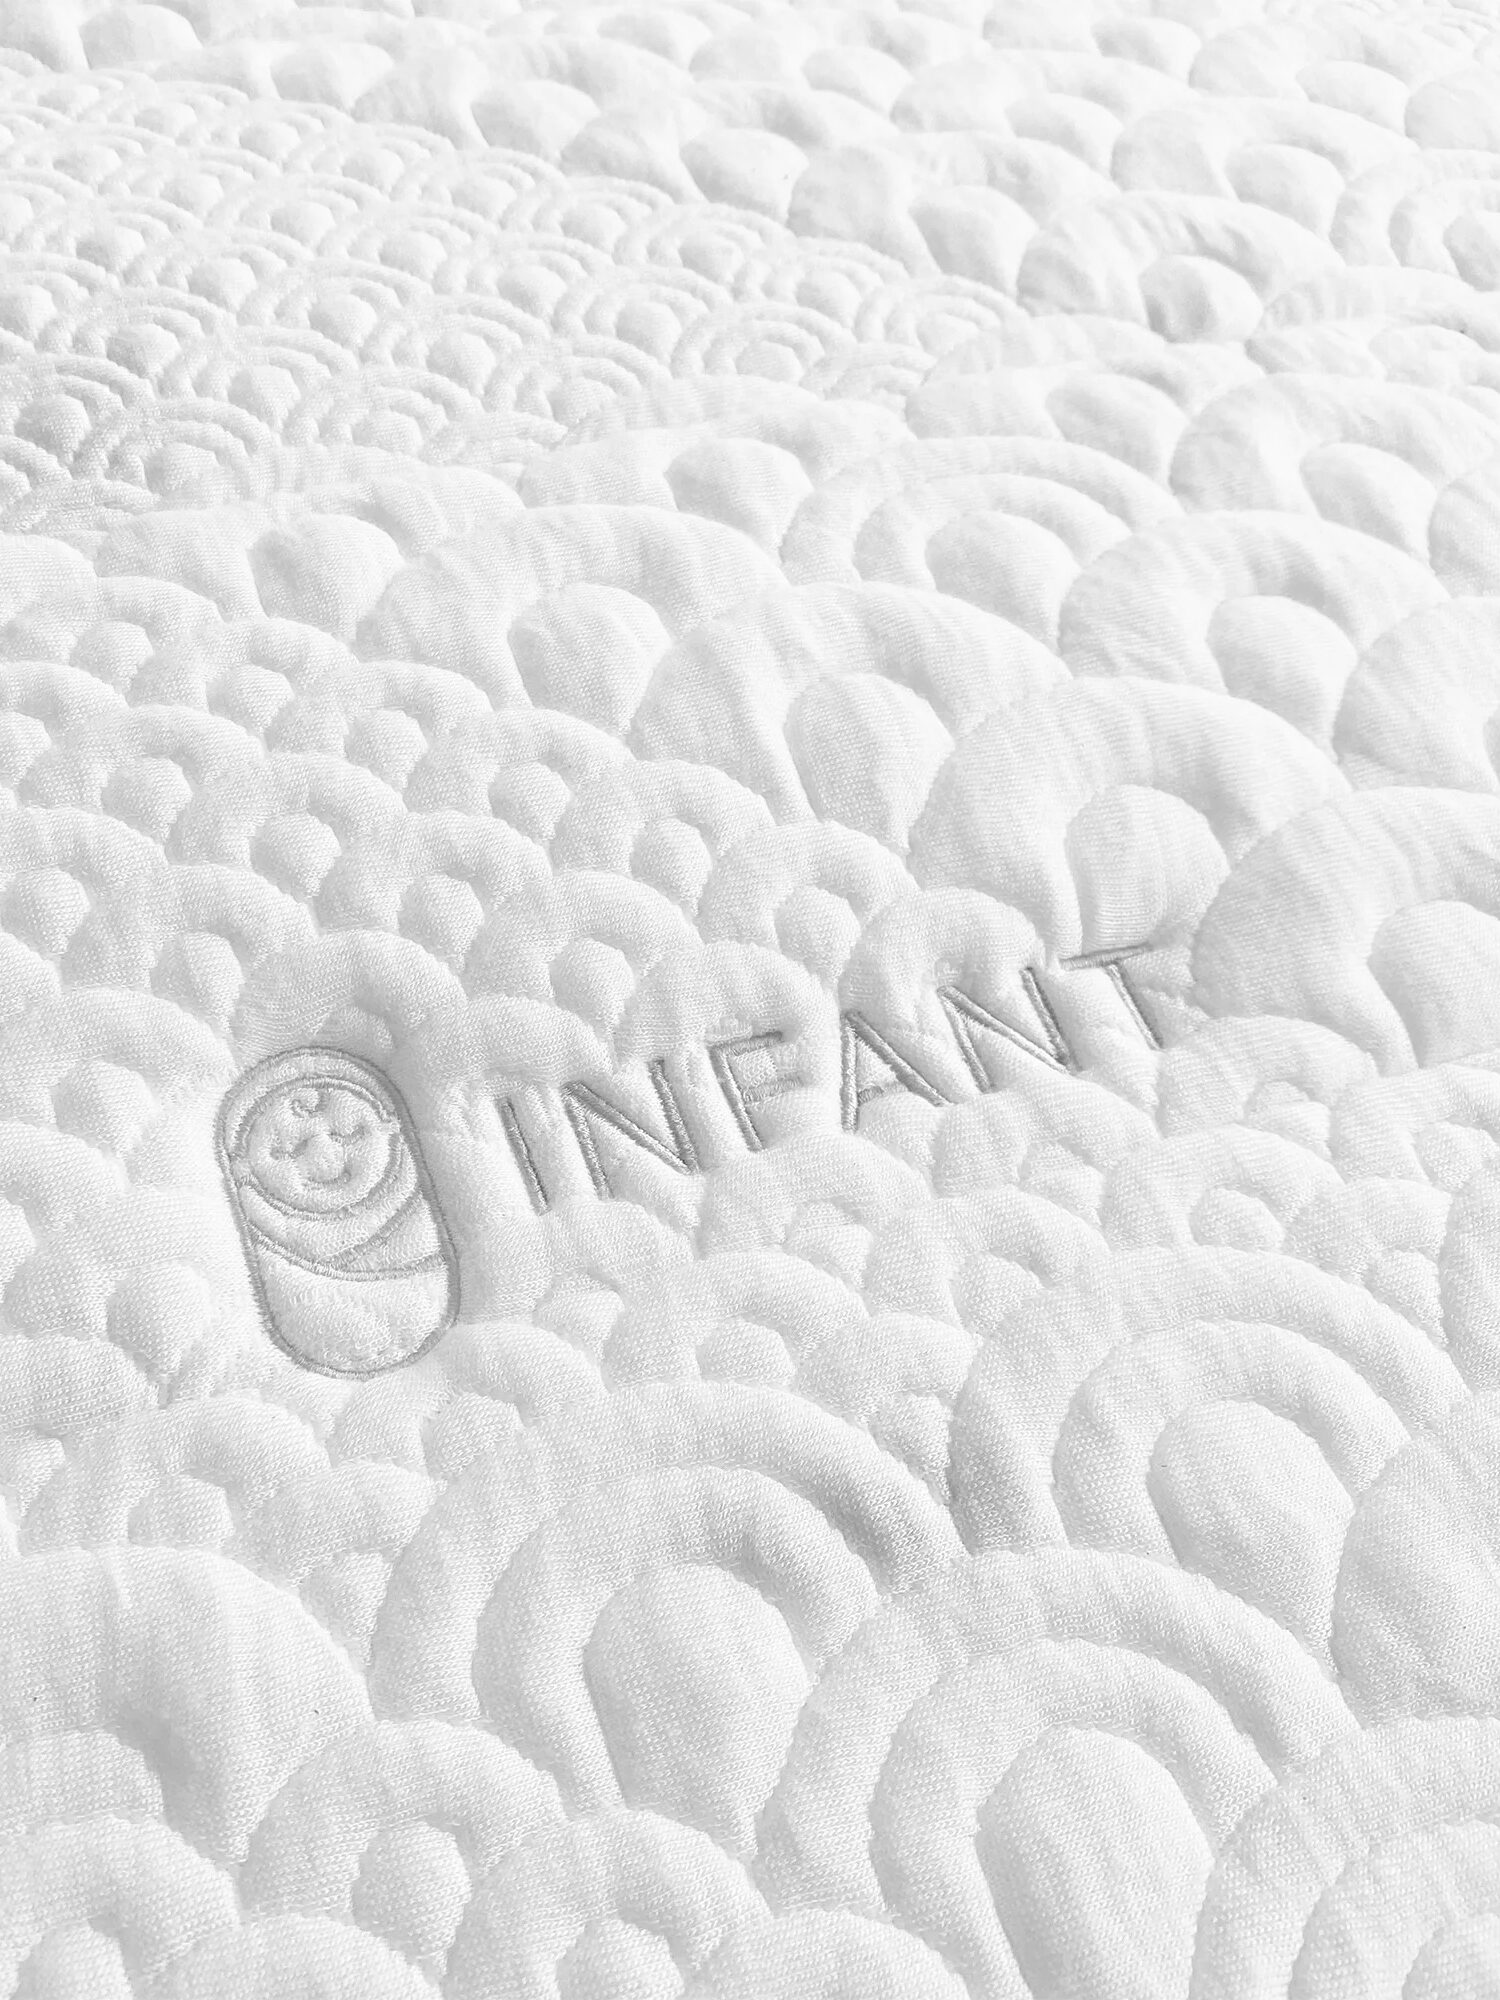 A close up shot of the Organic Dream crib mattress.